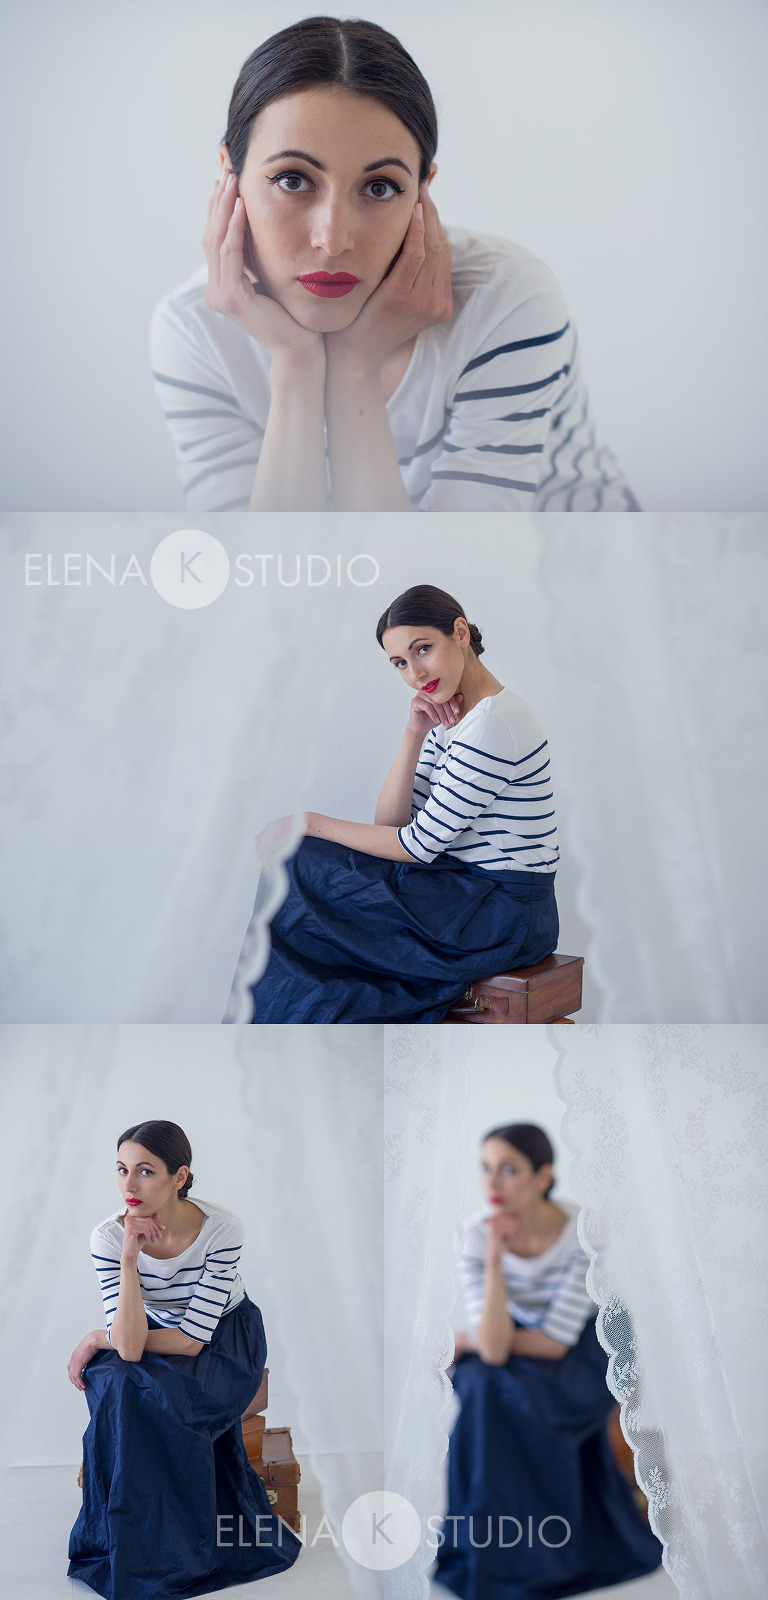 elena-k-studio-fotografo-book-Milano